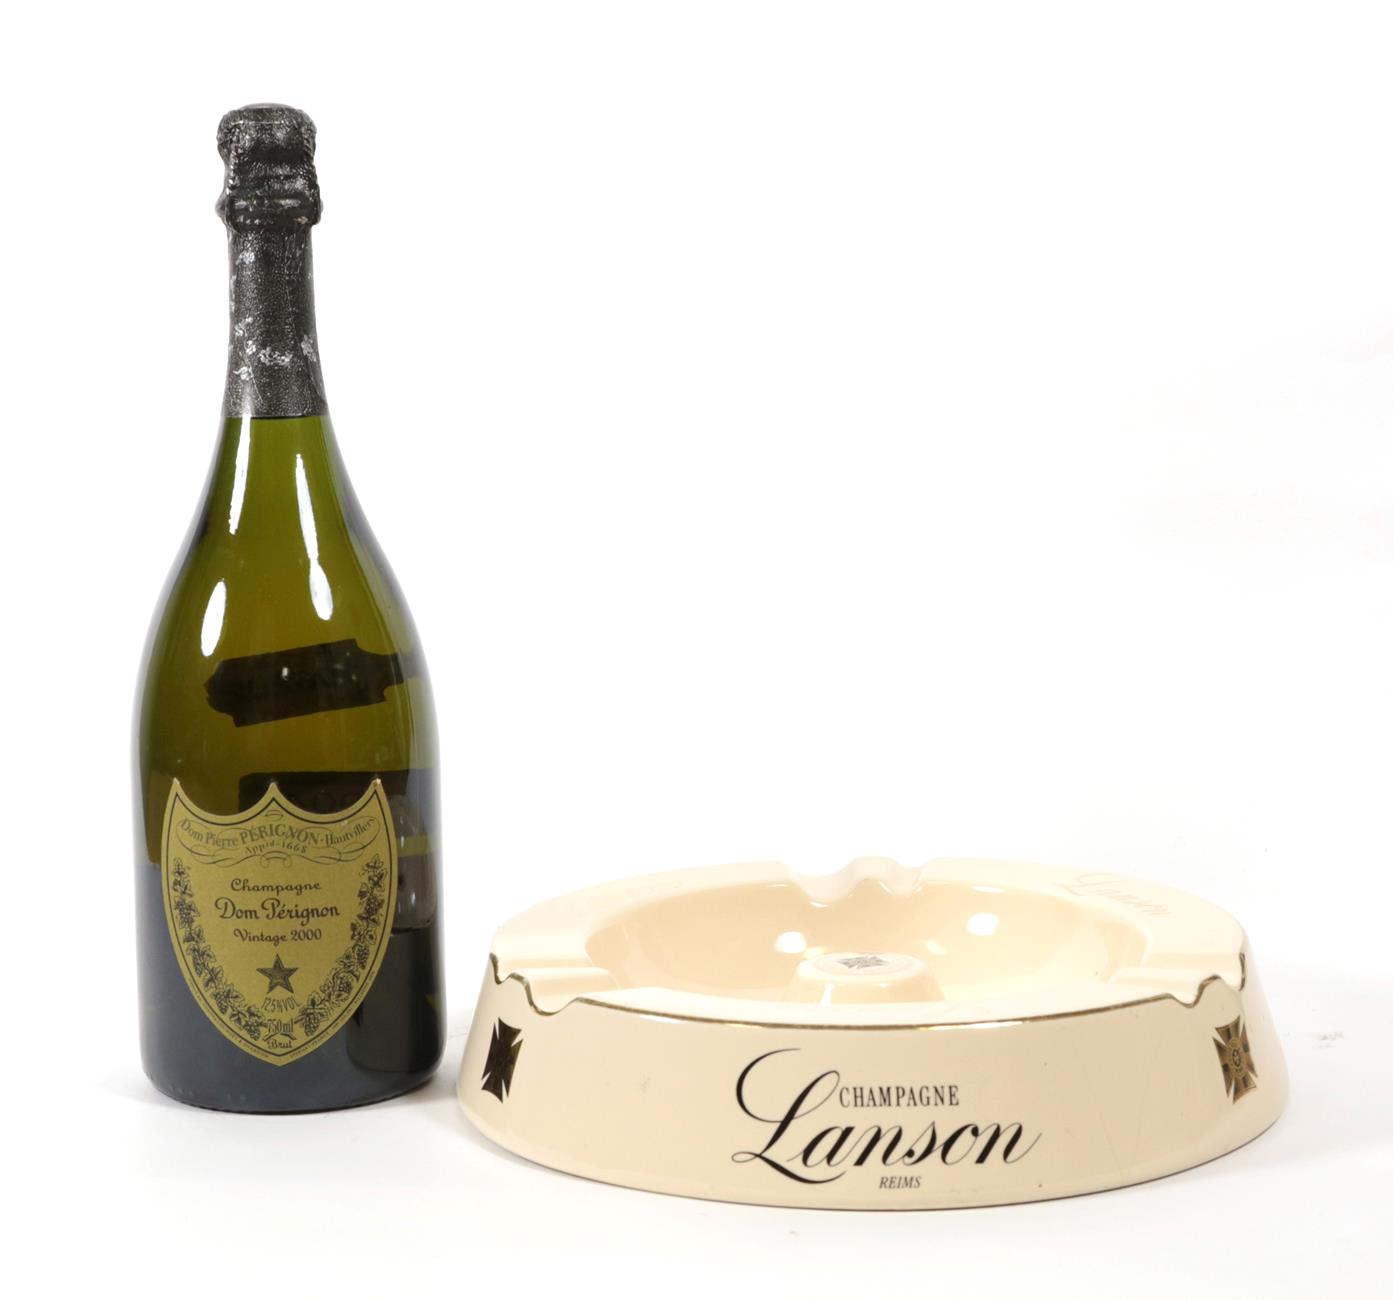 Lot 5004 - Möet & Chandon Dom Pérignon 2000 Champagne, (one bottle) together with a Lanson Champagne...